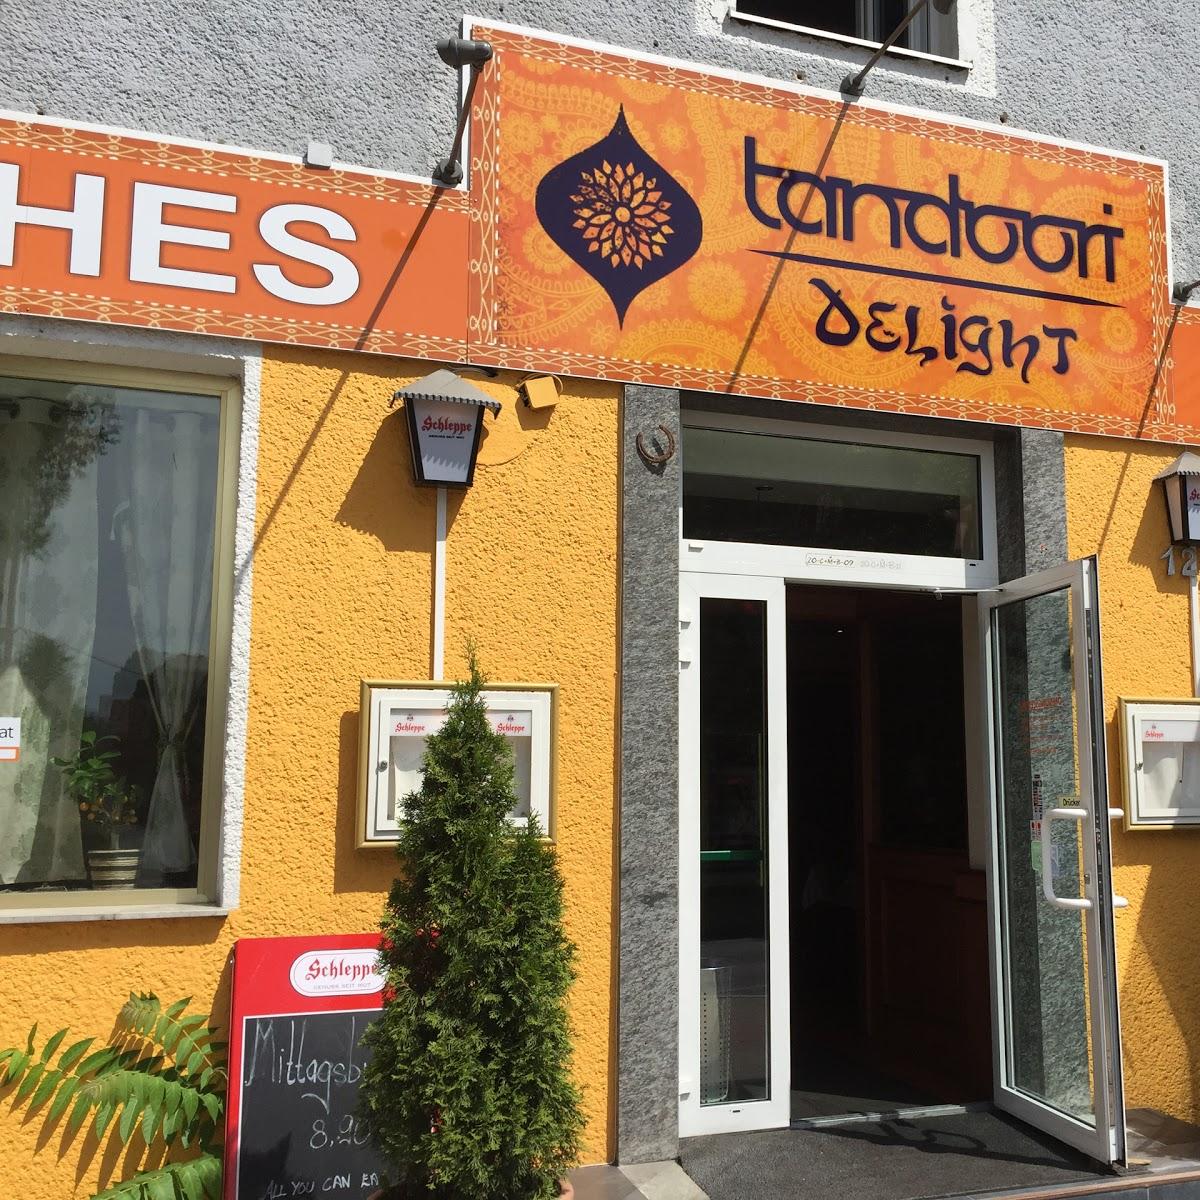 Restaurant "Tandoori delight" in Klagenfurt am Wörthersee